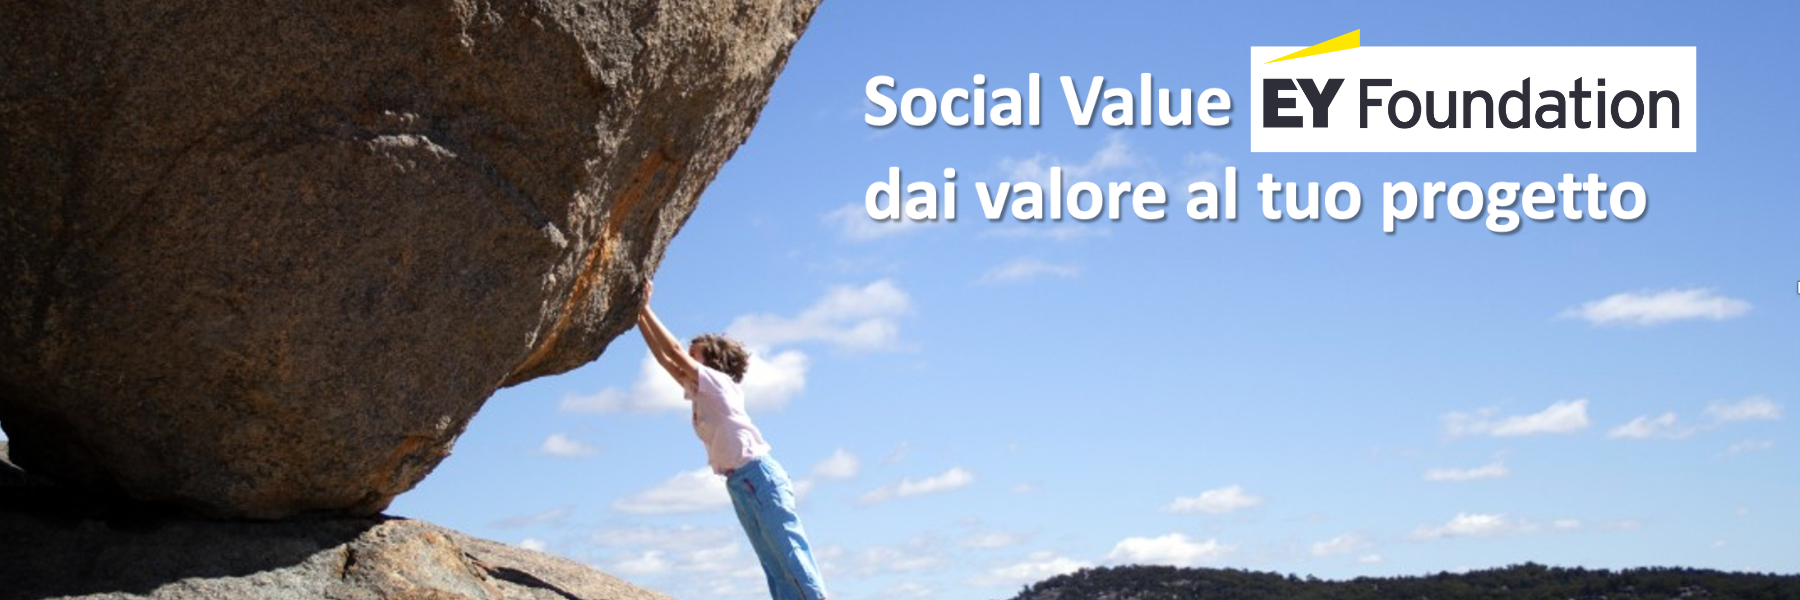 Rete del Dono Social Value EY Foundation